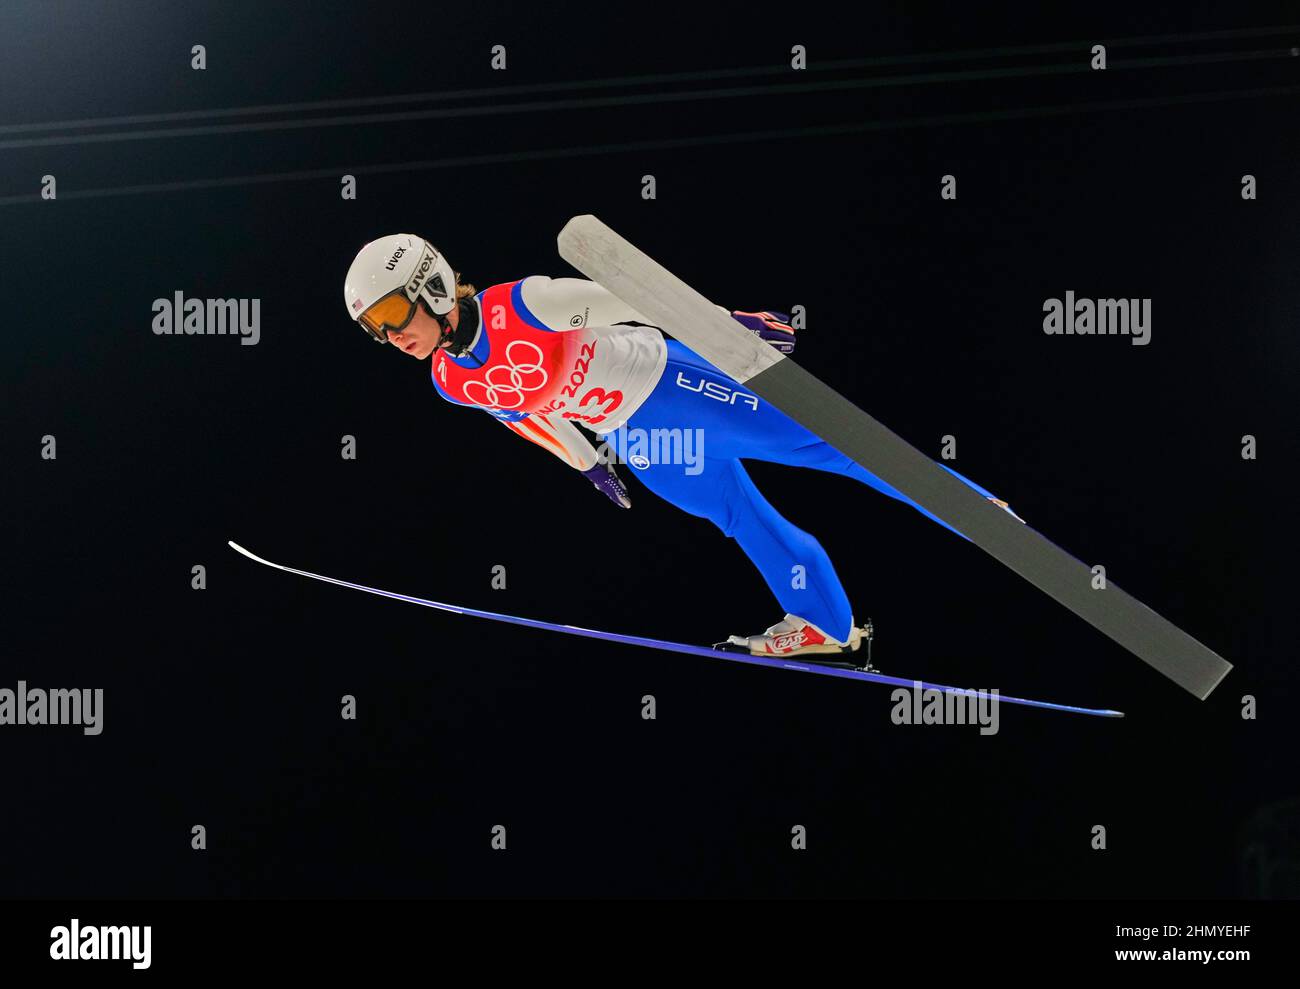 Zhangjiakou, China, 2022 Winter Olympics, February 11, 2022: Gasienica Patrick from USA during Ski Jumping at Zhangjiakou Snow Park. Kim Price/CSM. Stock Photo